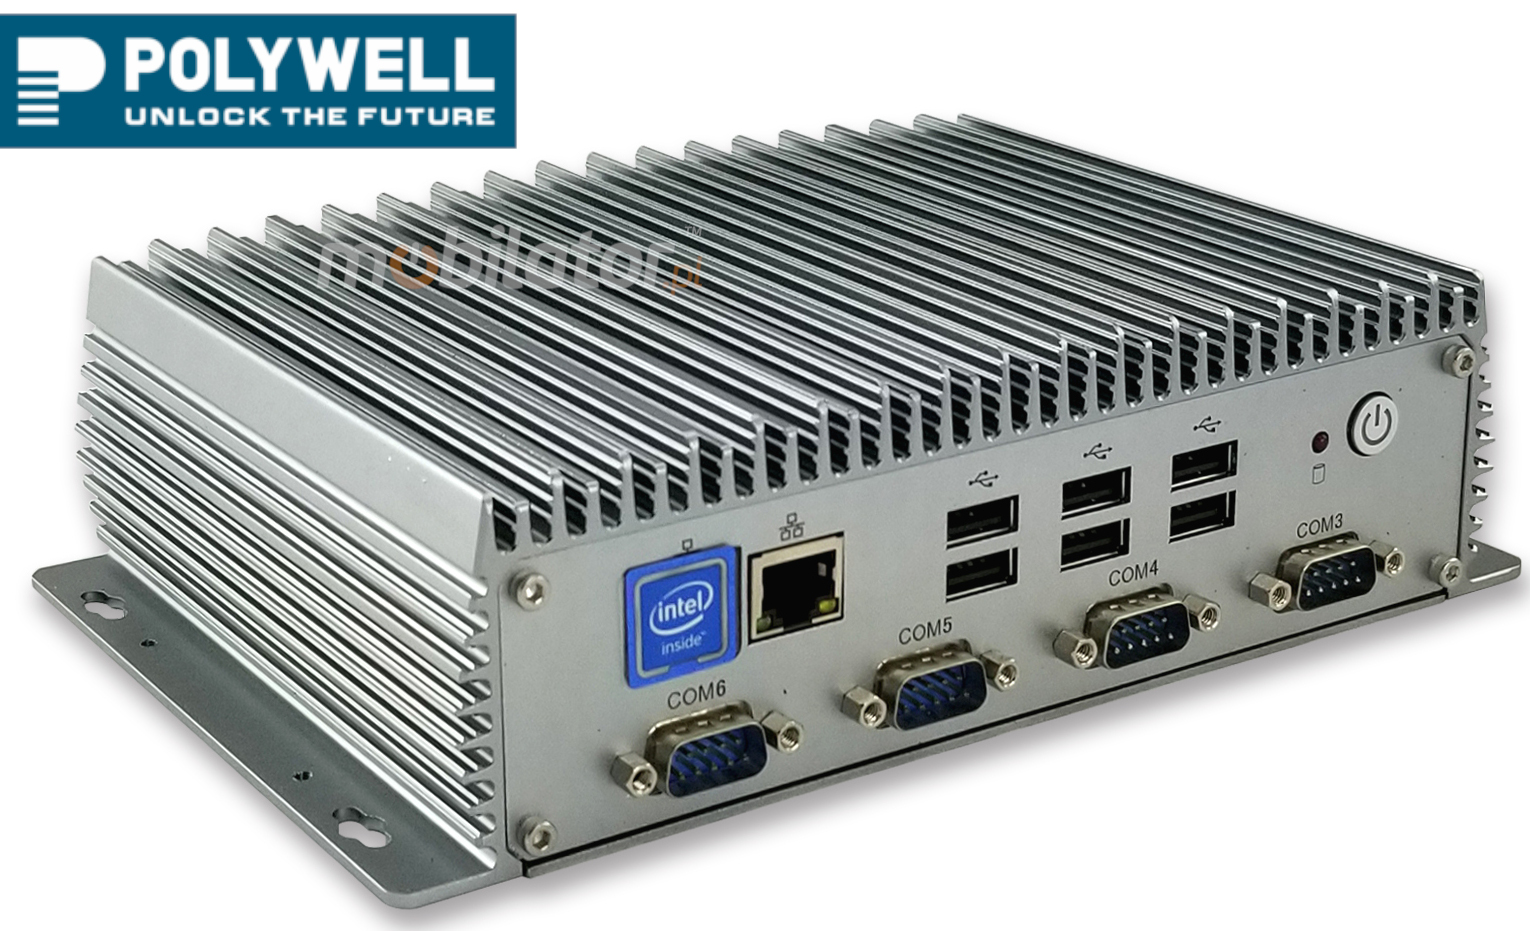 Polywell-Nano-U8FL2C6 Intel i7 small reliable fast and efficient mini pc